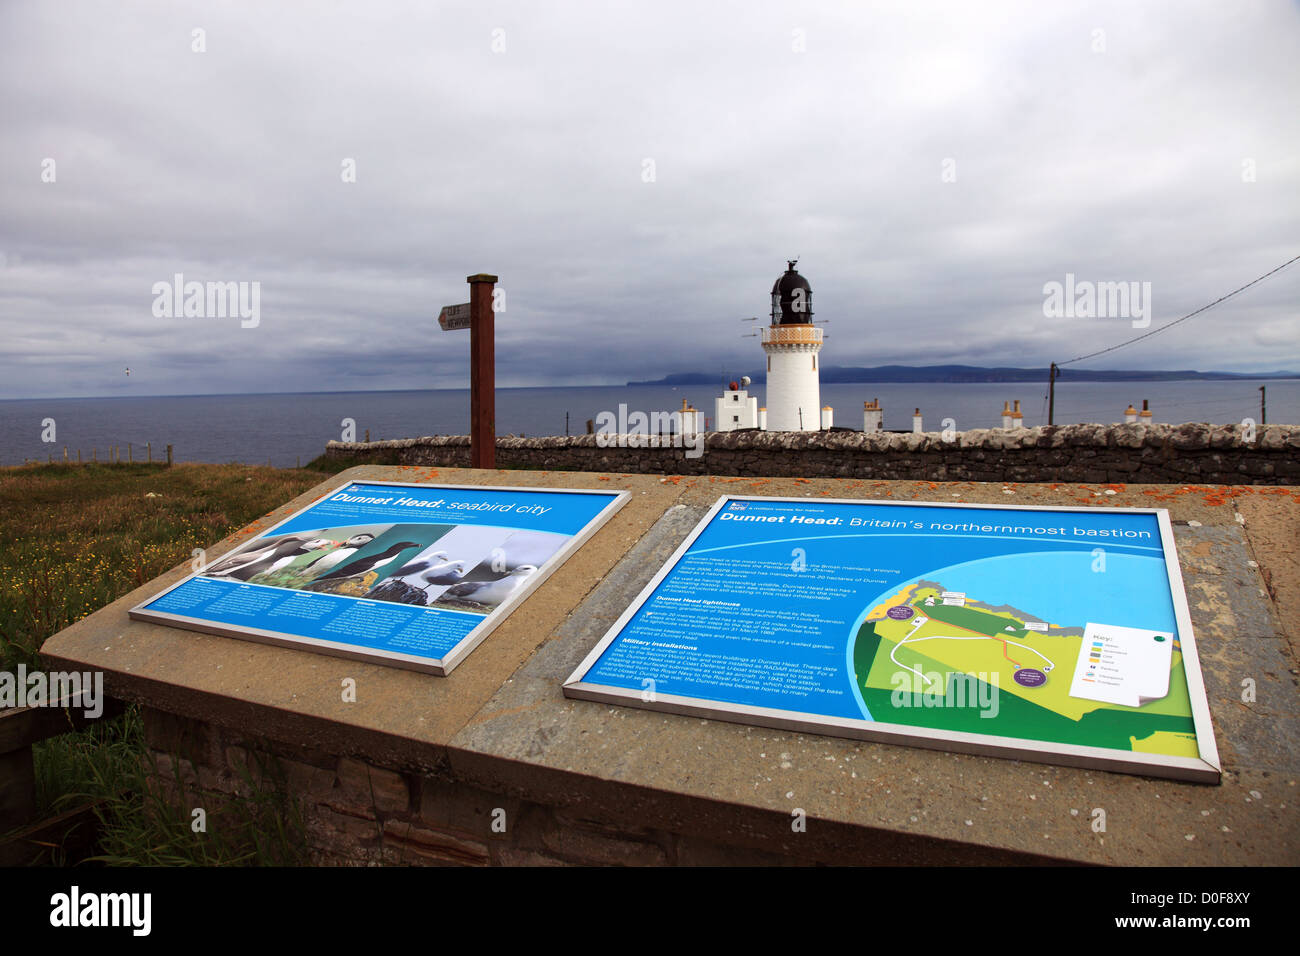 Dunnet Head lighthouse, Scotland UK Stock Photo